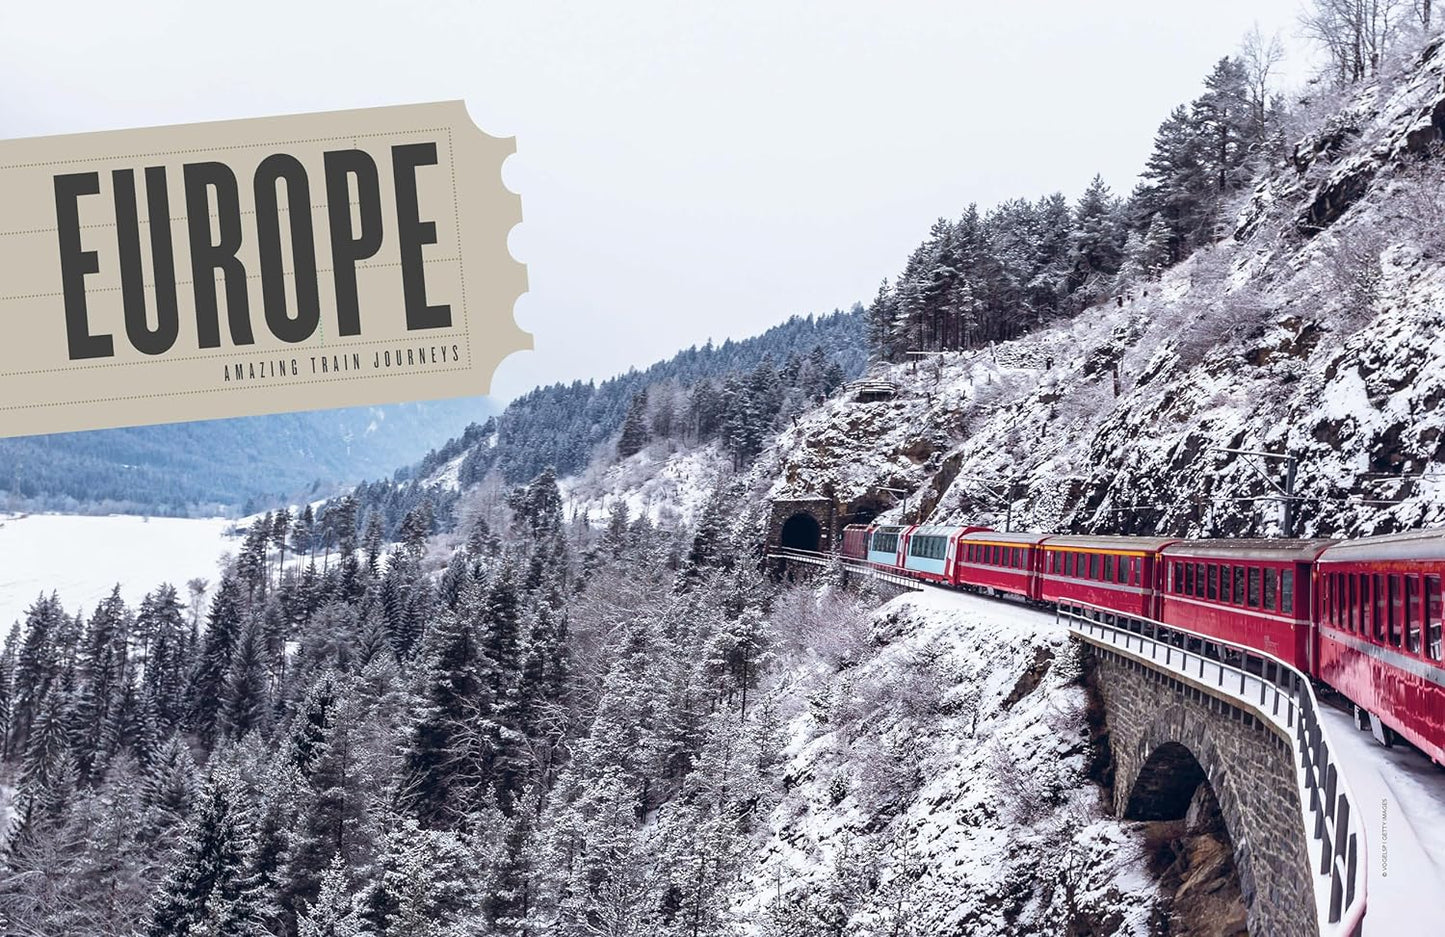 Lonely Planet Amazing Train Journeys